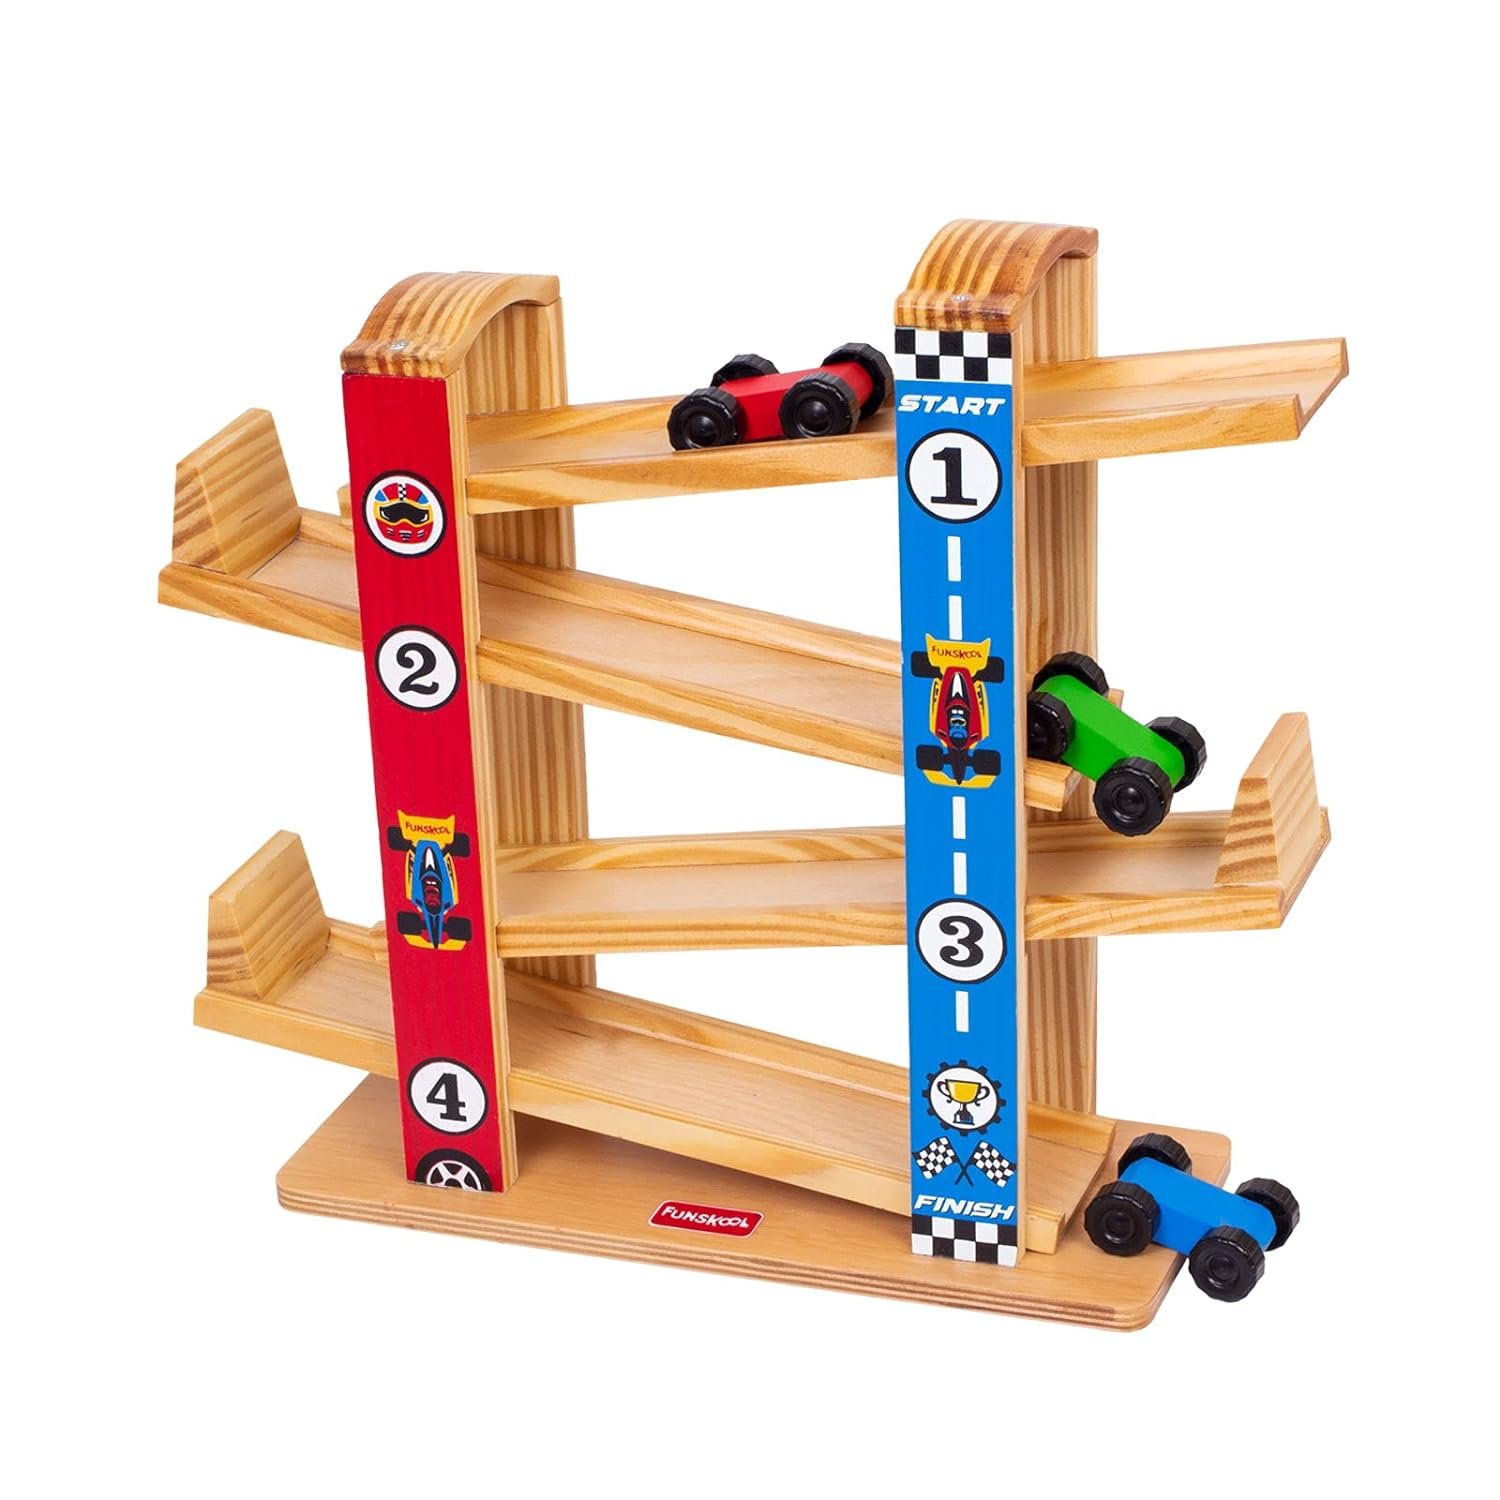 Giggles Funskool Ramp Wooden Racing Toy image 5